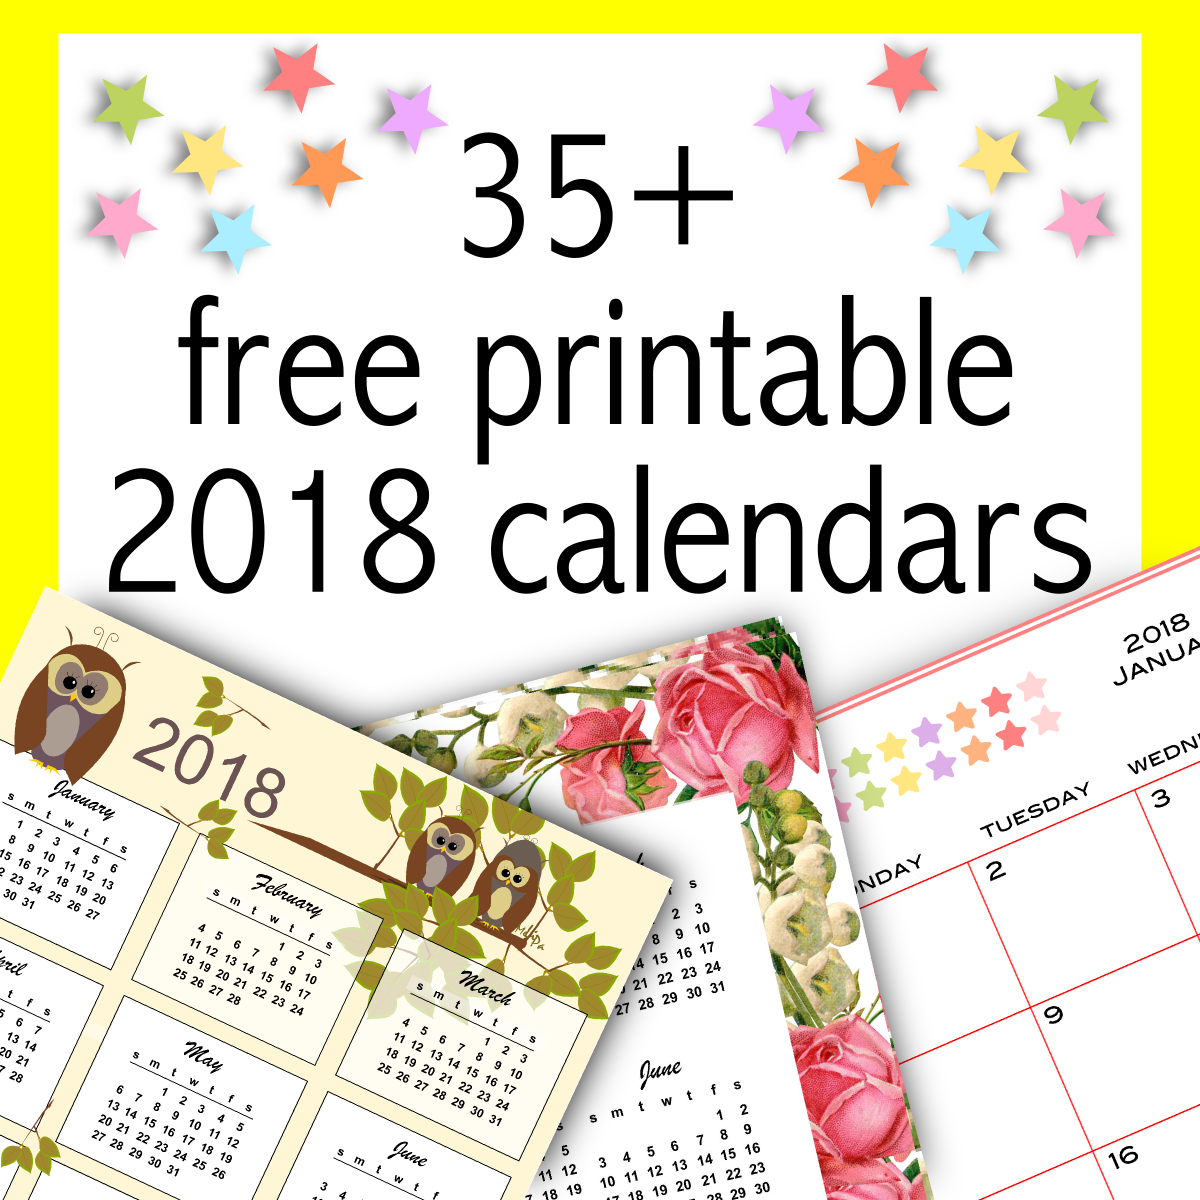 35-free-printable-2018-calendars-2018-kalender-round-up-meinlilapark